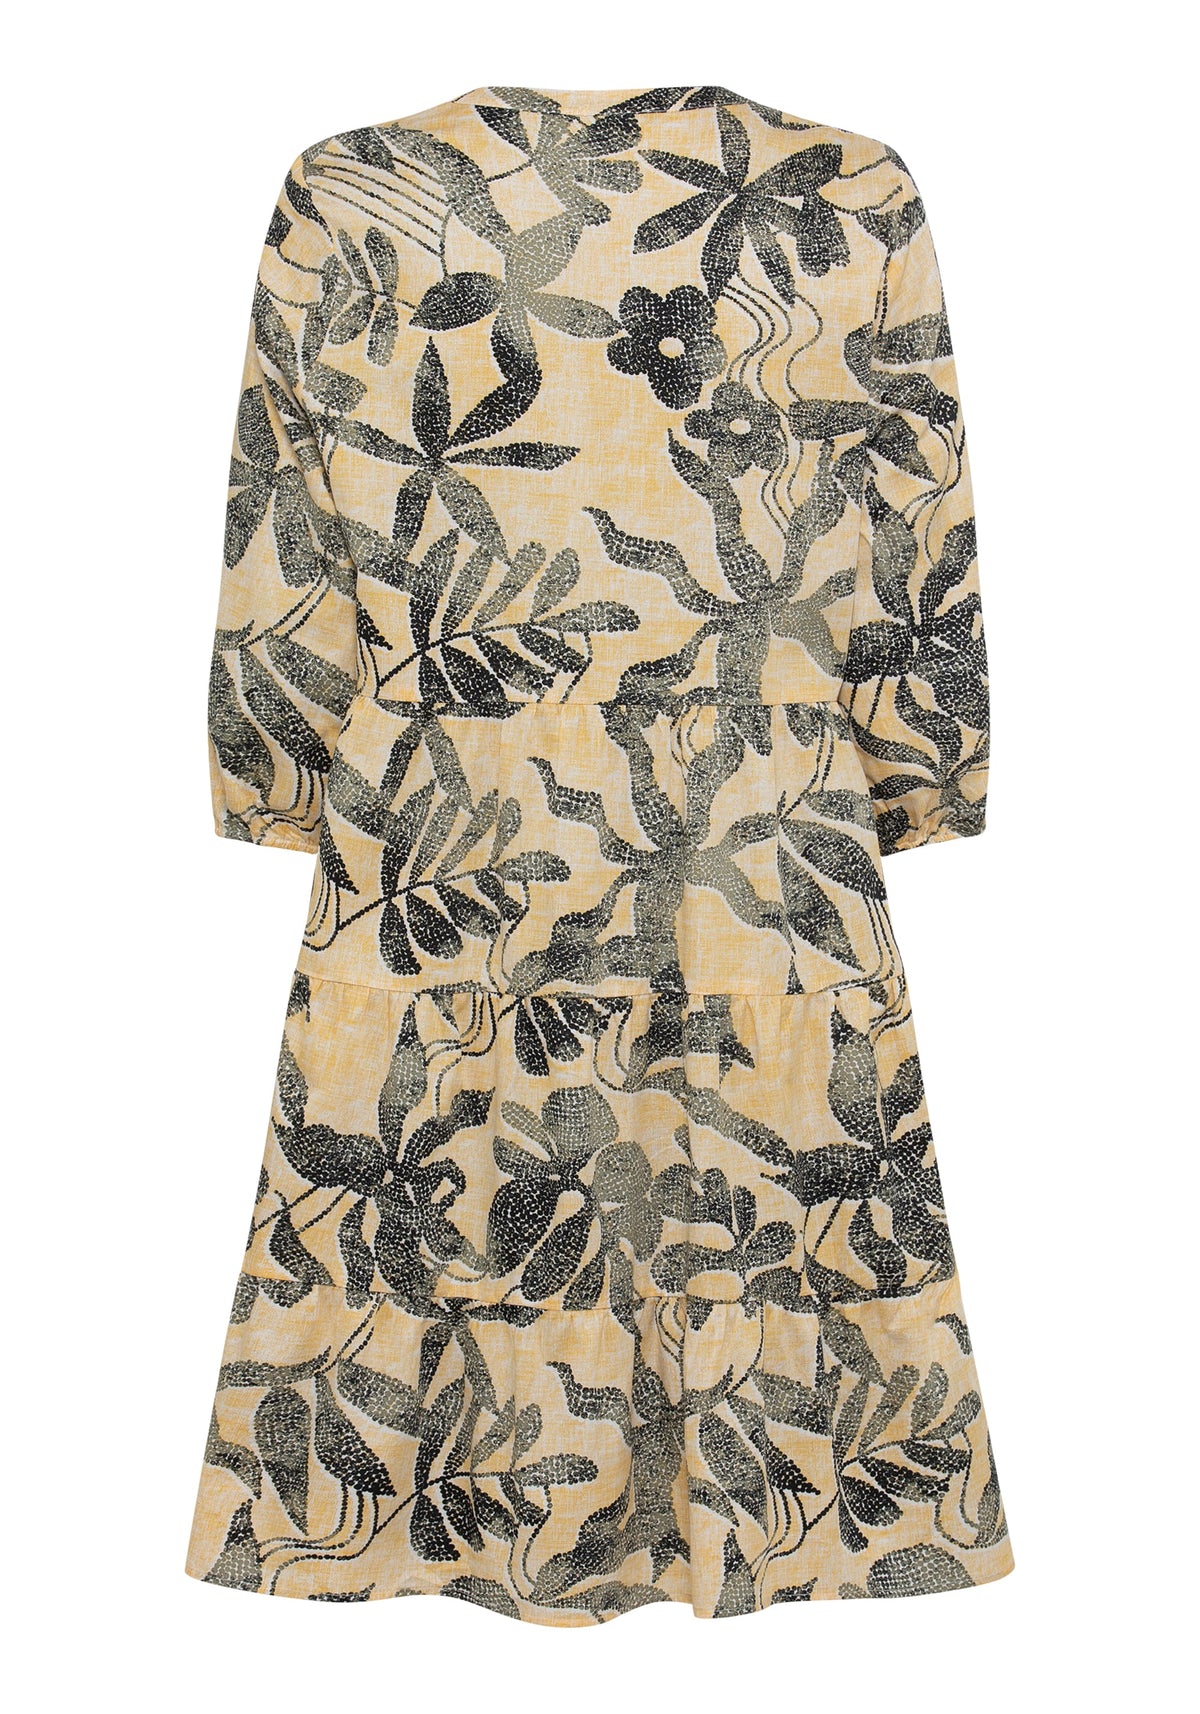 100% Cotton 3/4 Sleeve Jungle Leaf Print Tiered Tunic Dress